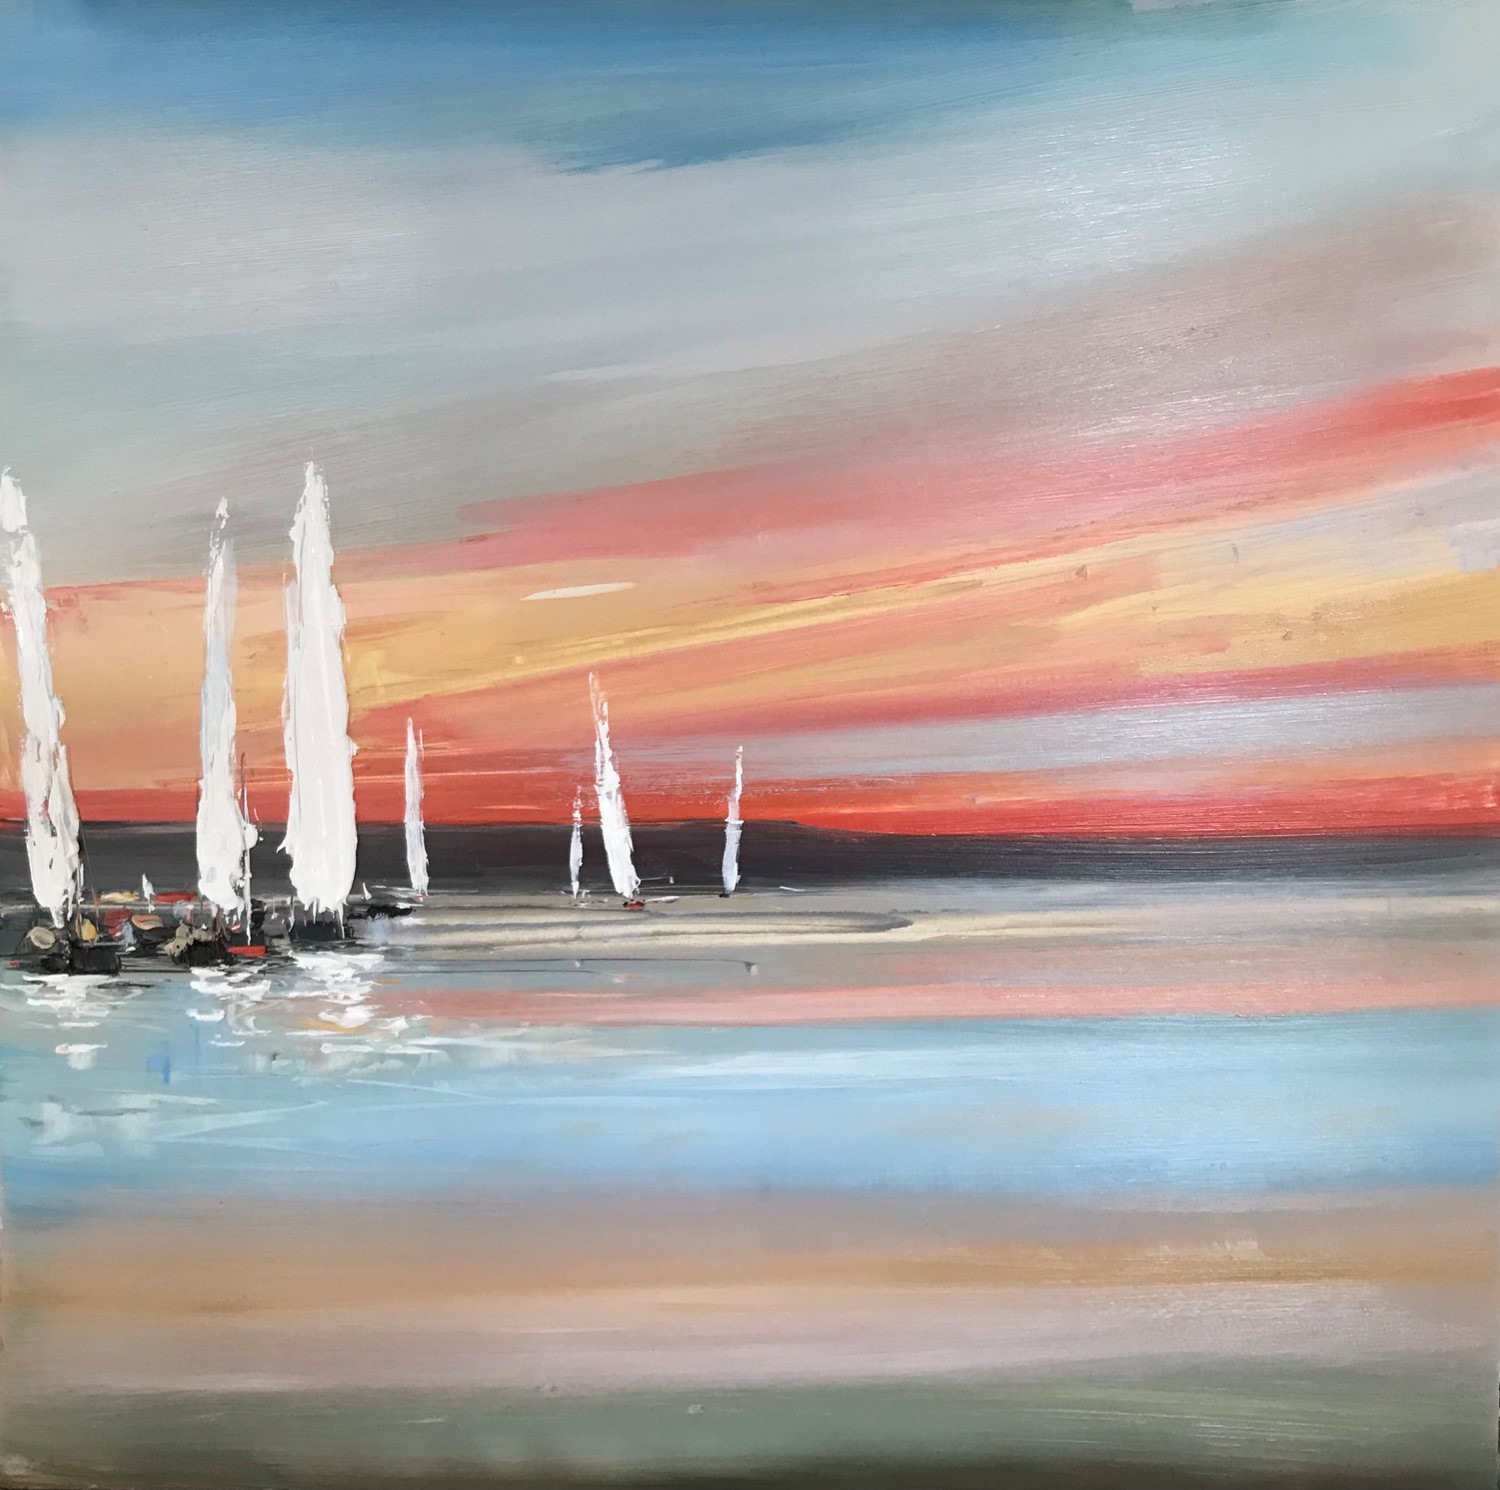 'A sailing haven ' by artist Rosanne Barr